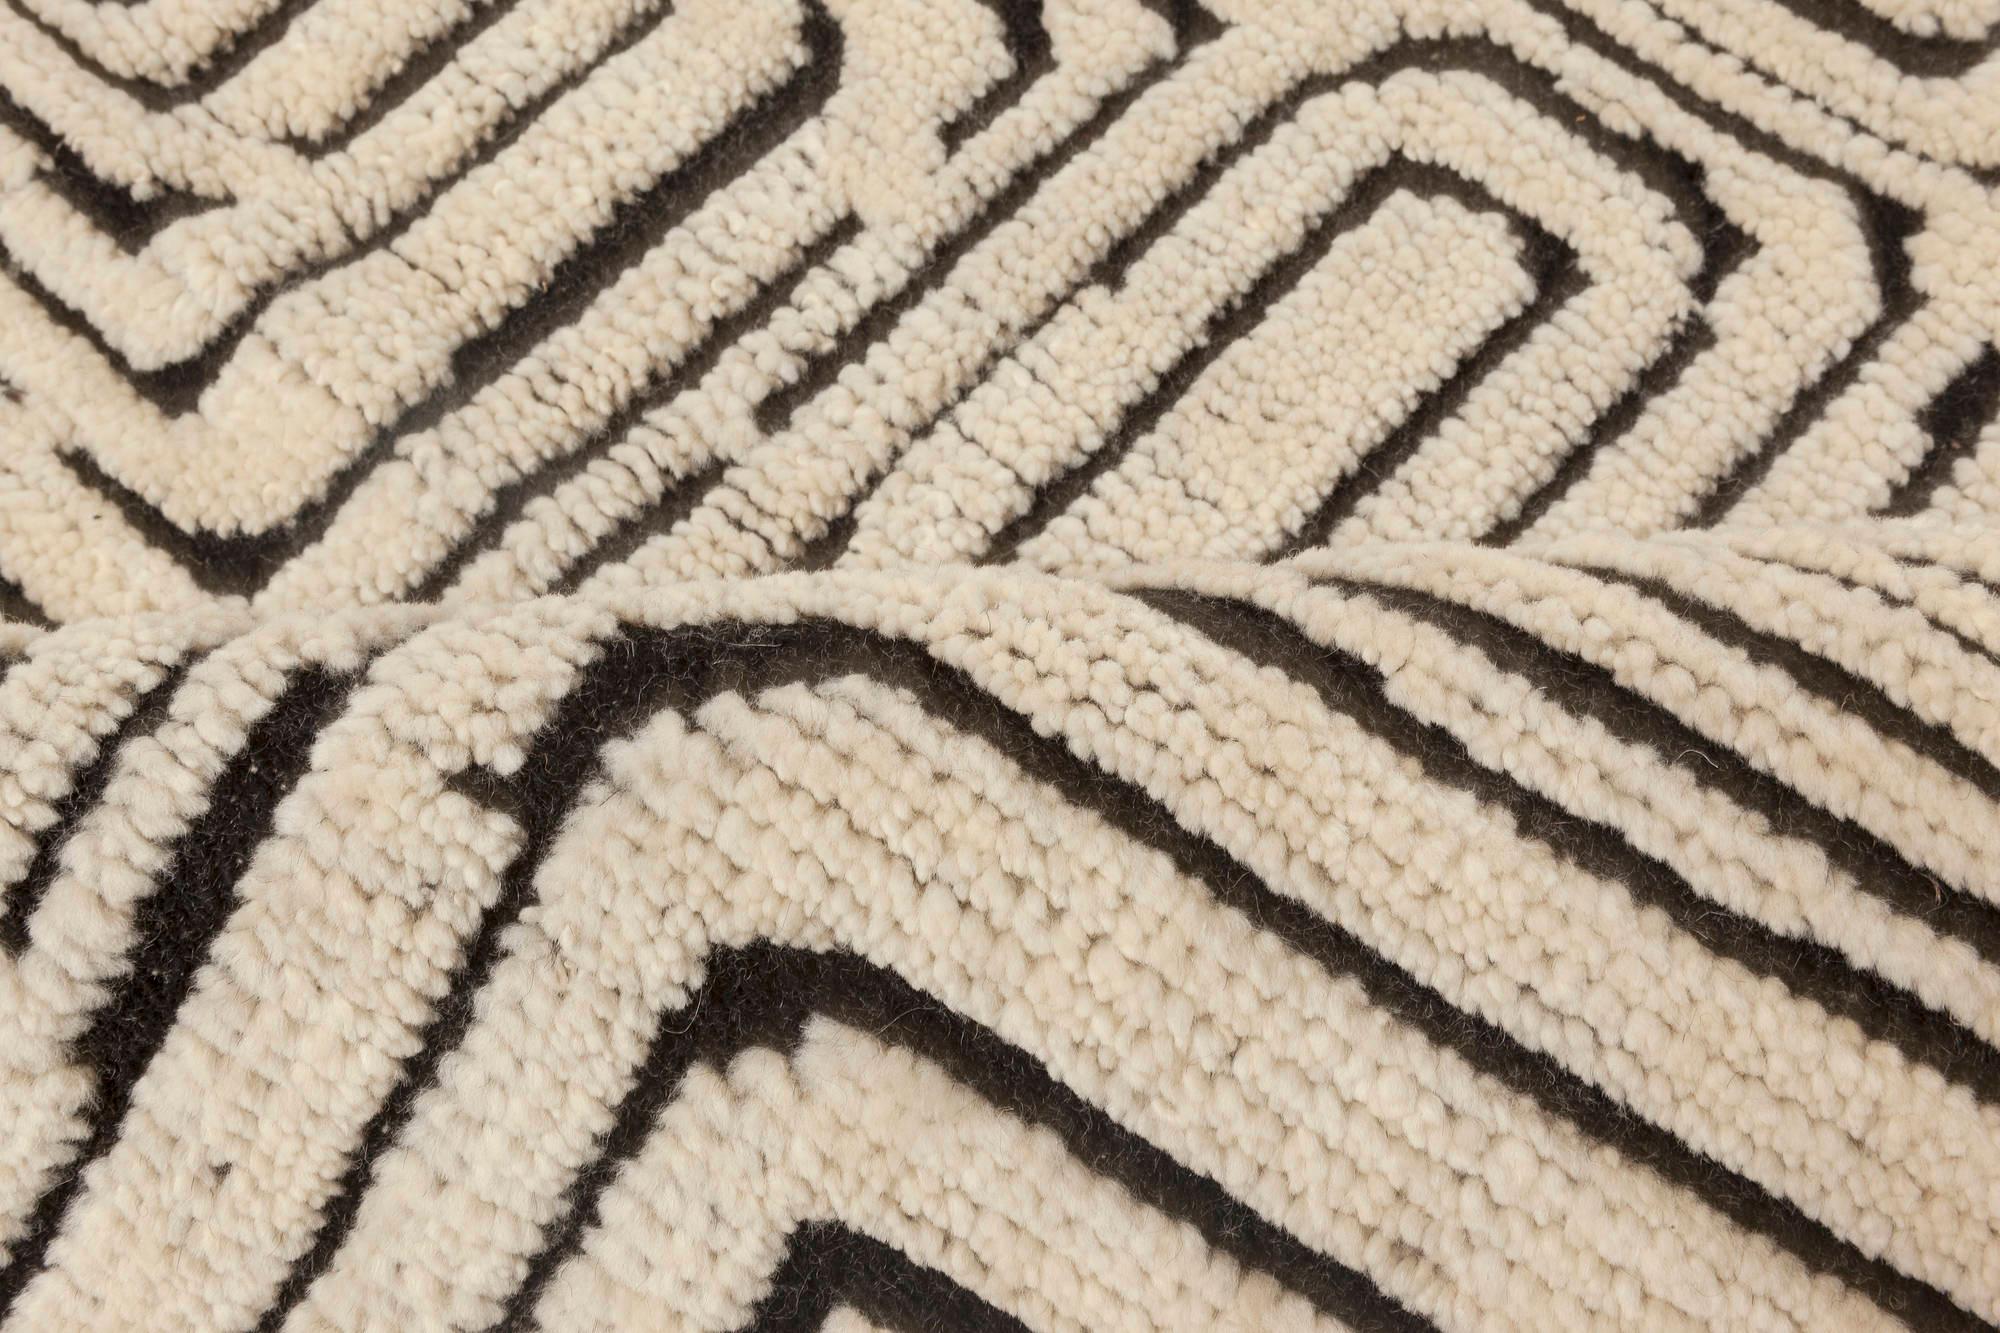 Modern Quagmire black and white geometric wool rug by Doris Leslie Blau
Measures: Size: 13'4